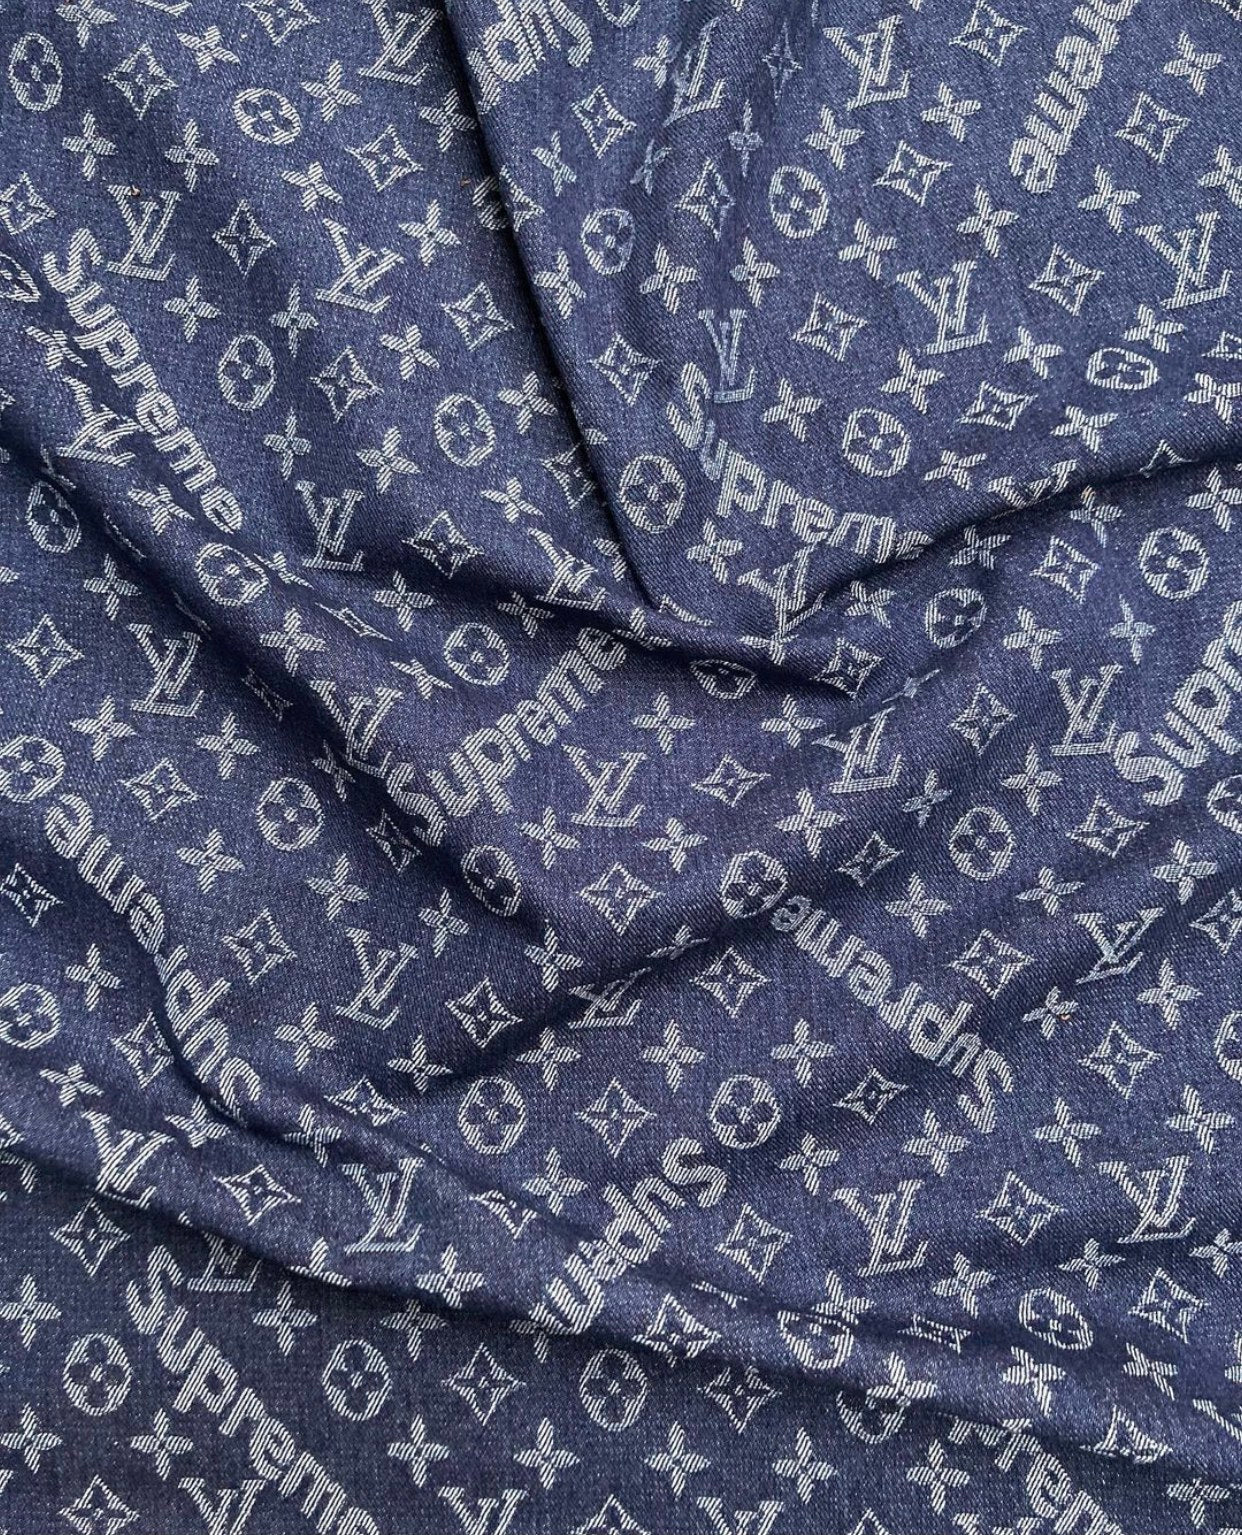 Blue Supreme Lv Denim Fabric for Custom Clothing